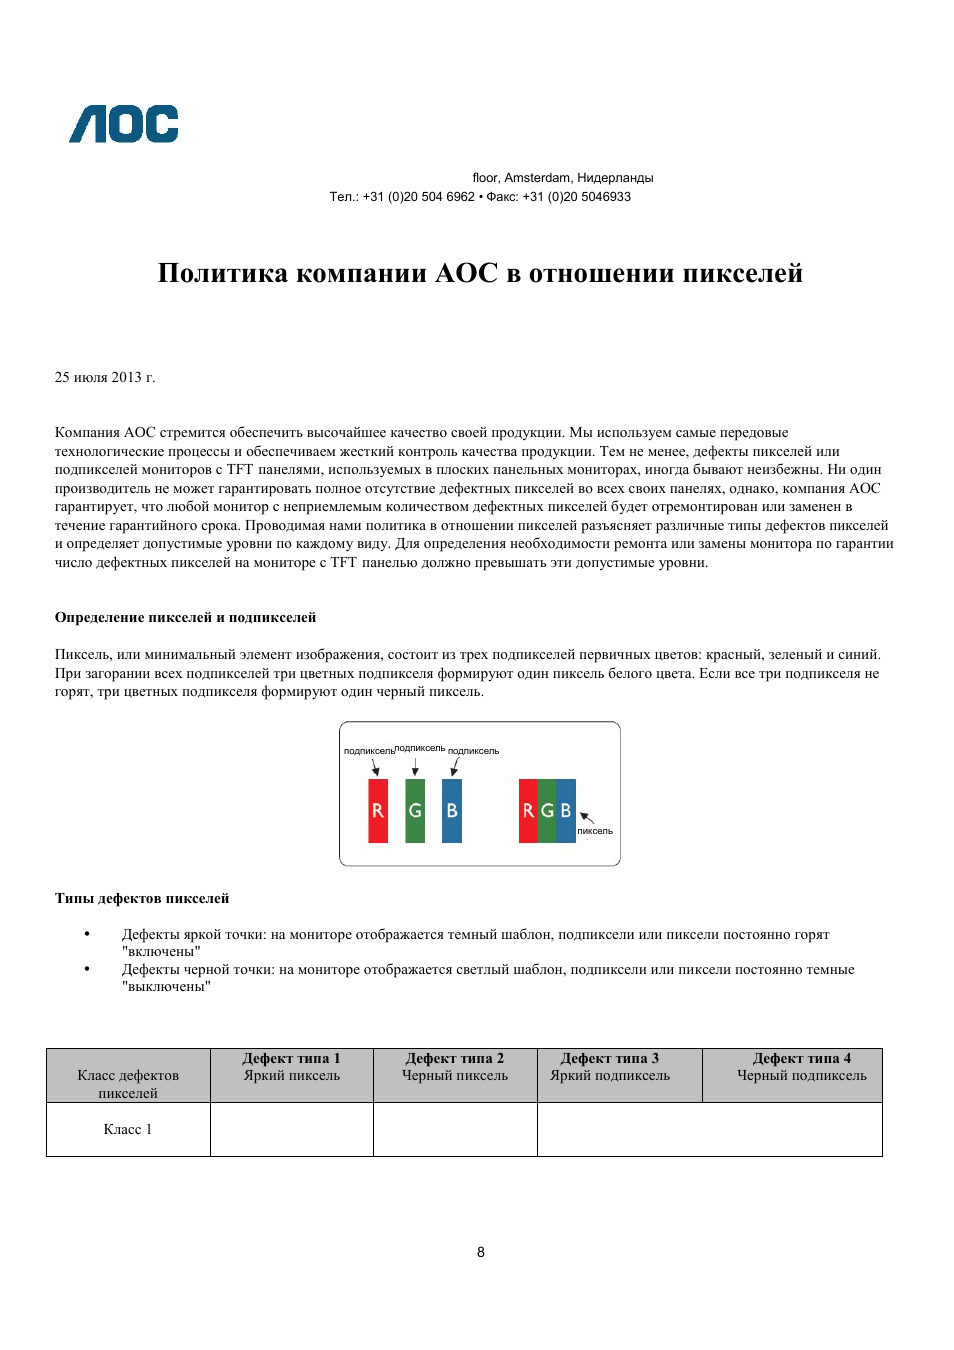 Политика компании aoc в отношении пикселей | Инструкция по эксплуатации AOC E2460PQ | Страница 68 / 68